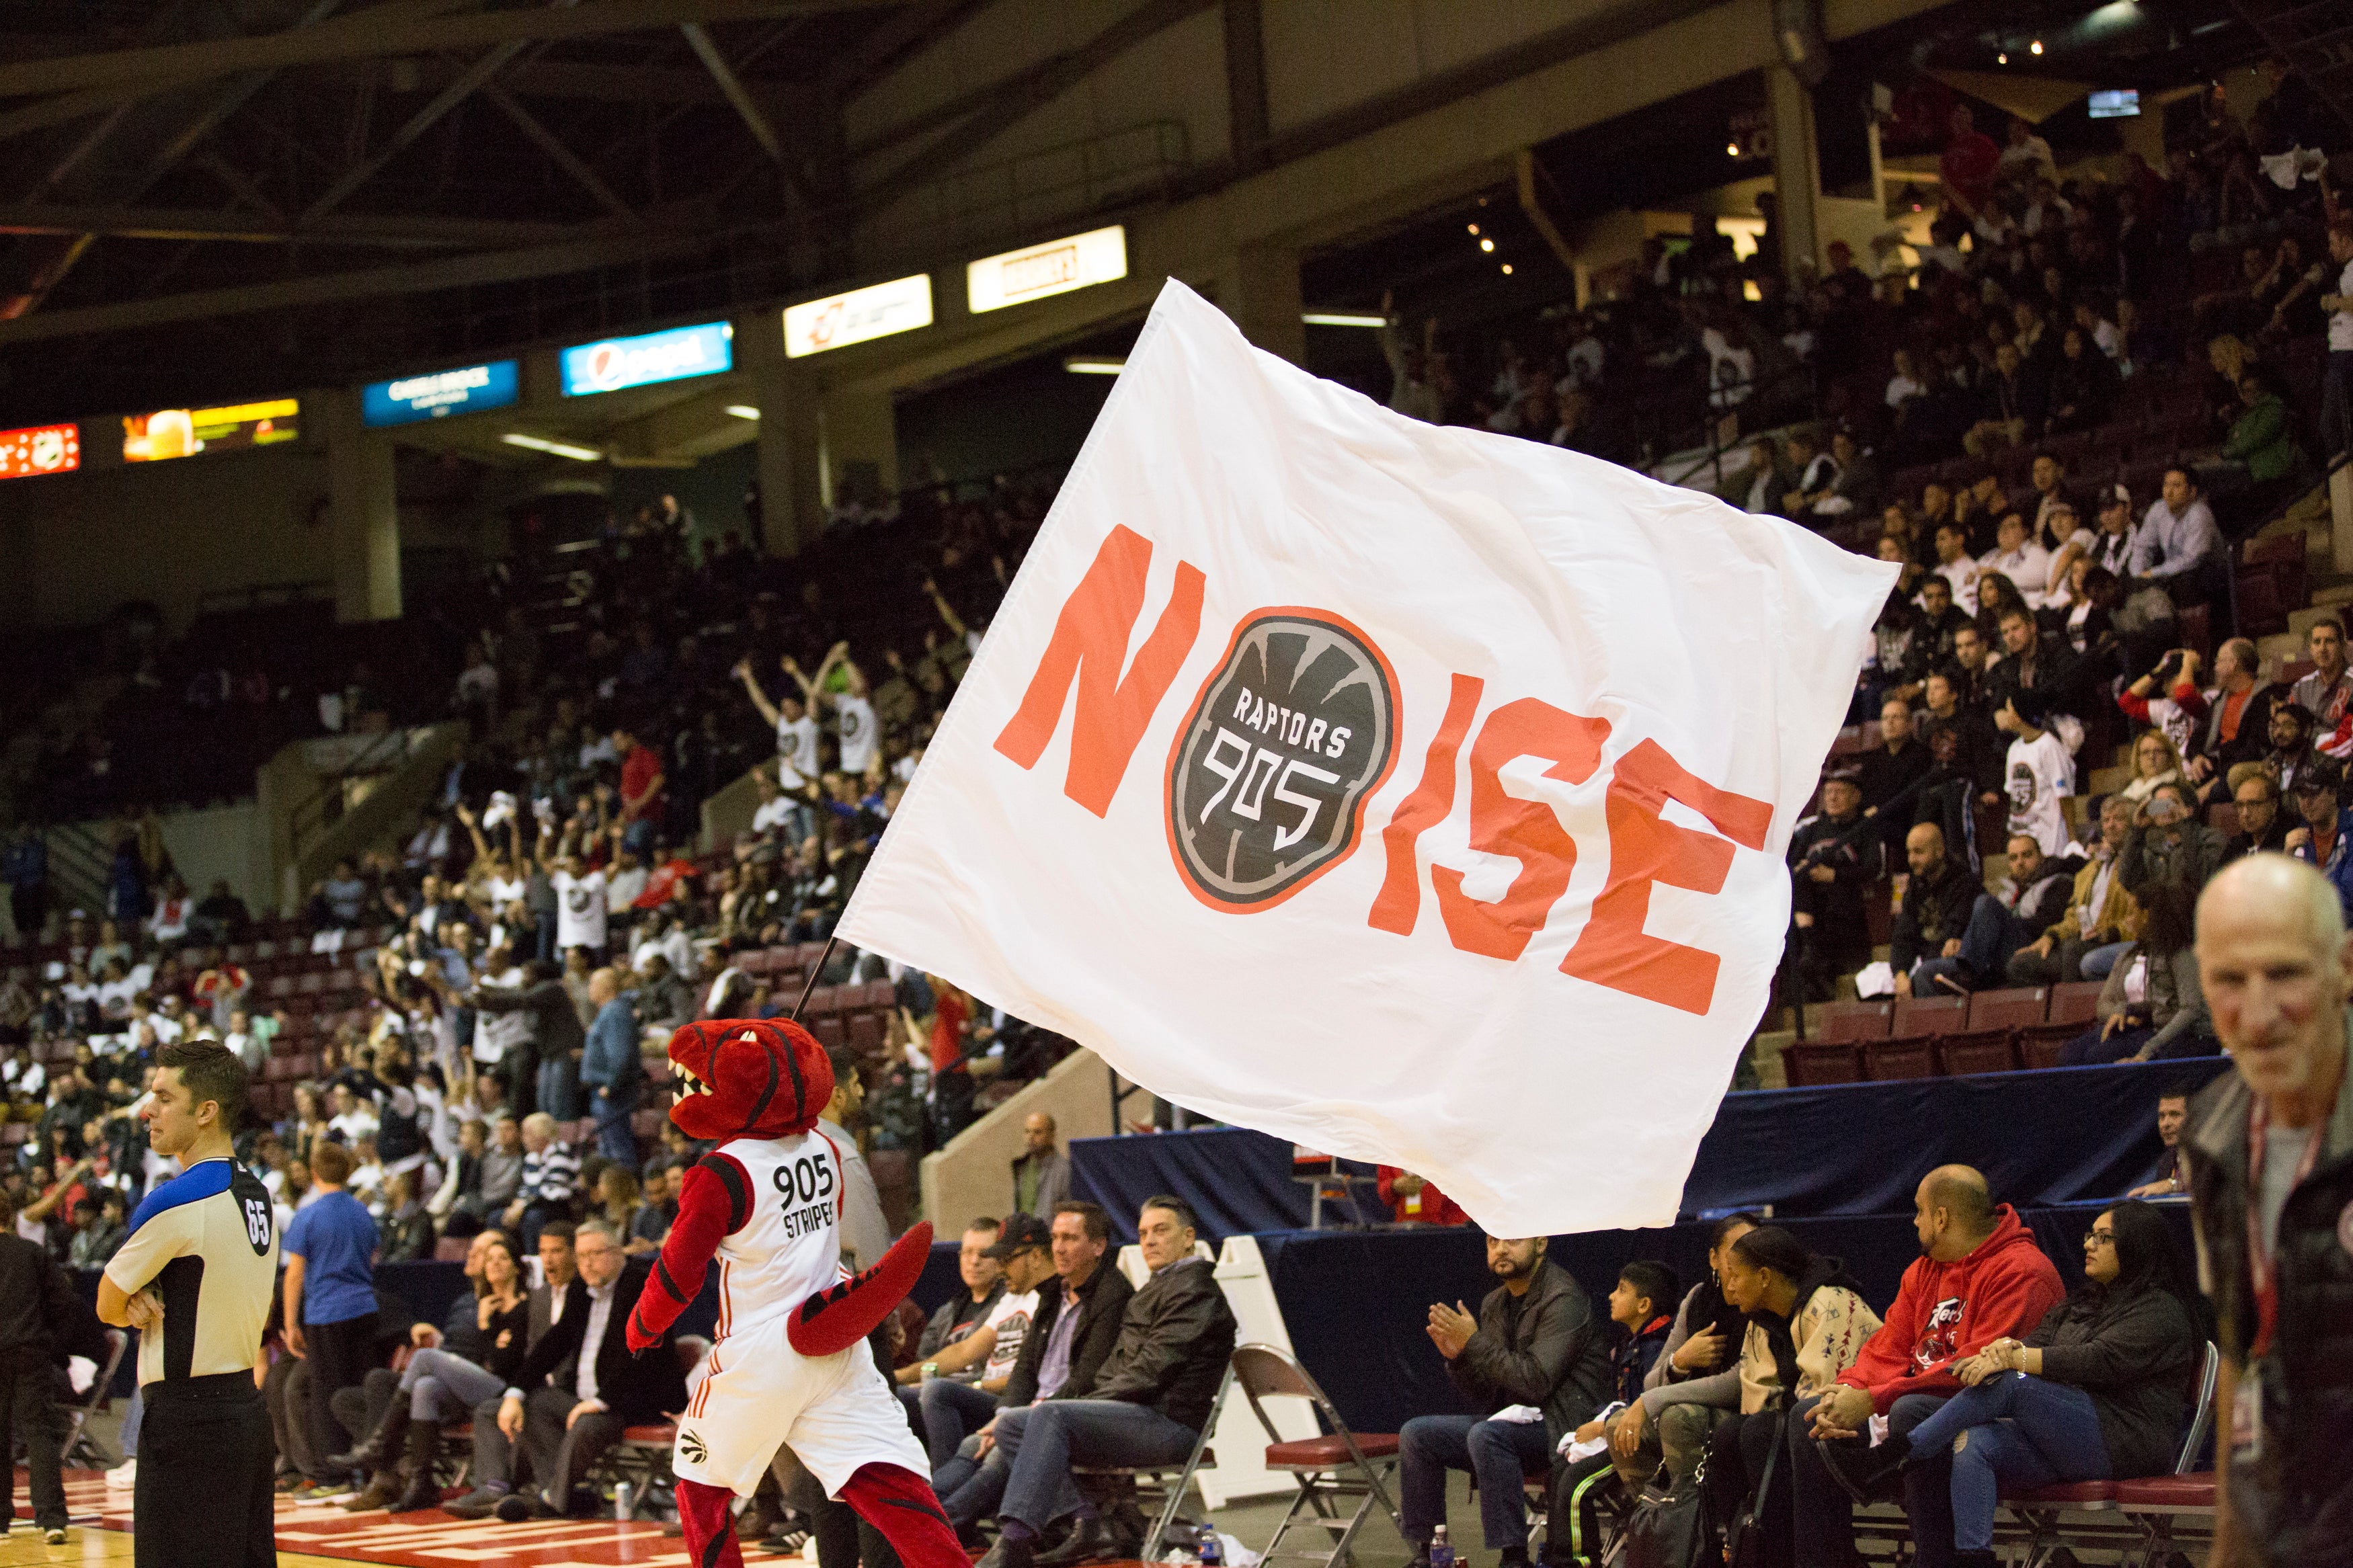 Raptors 905 vs Westchester Knicks in Mississauga promo photo for Exclusive presale offer code